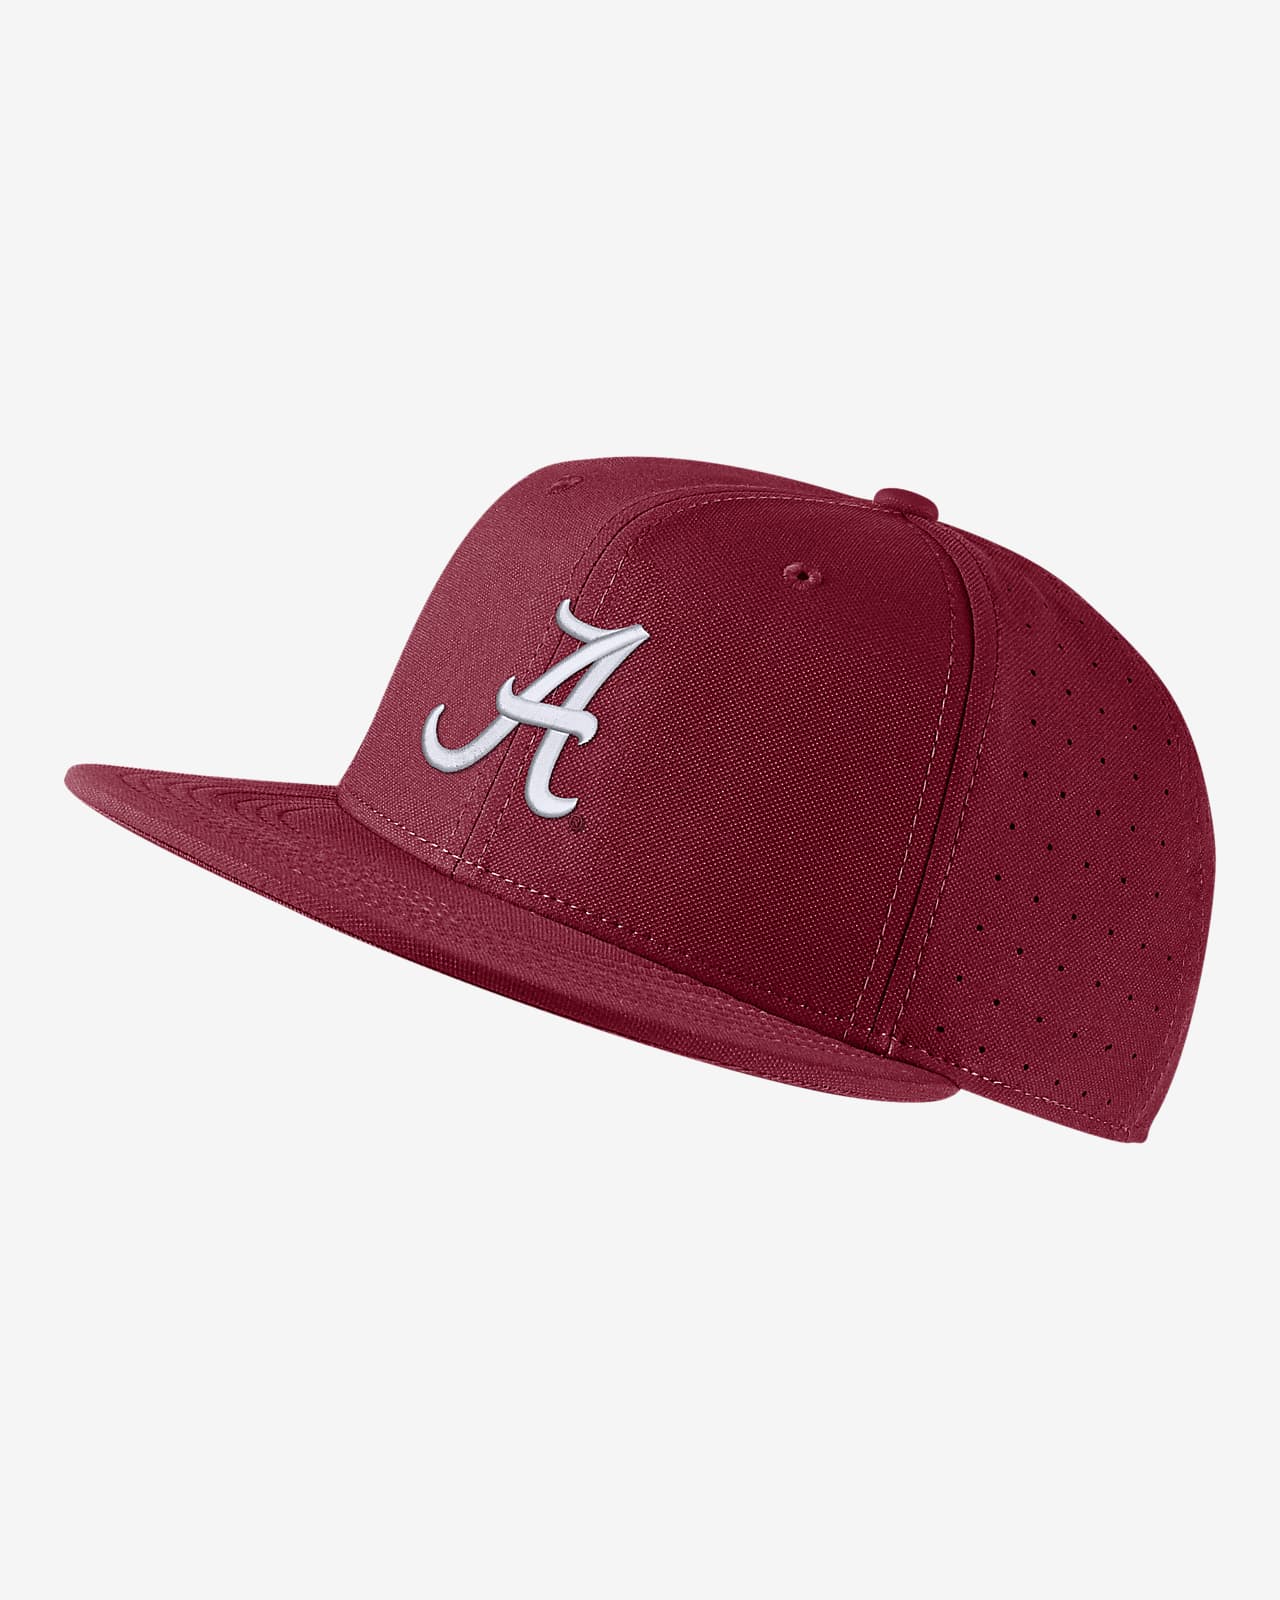 Alabama Nike College Fitted Baseball Hat